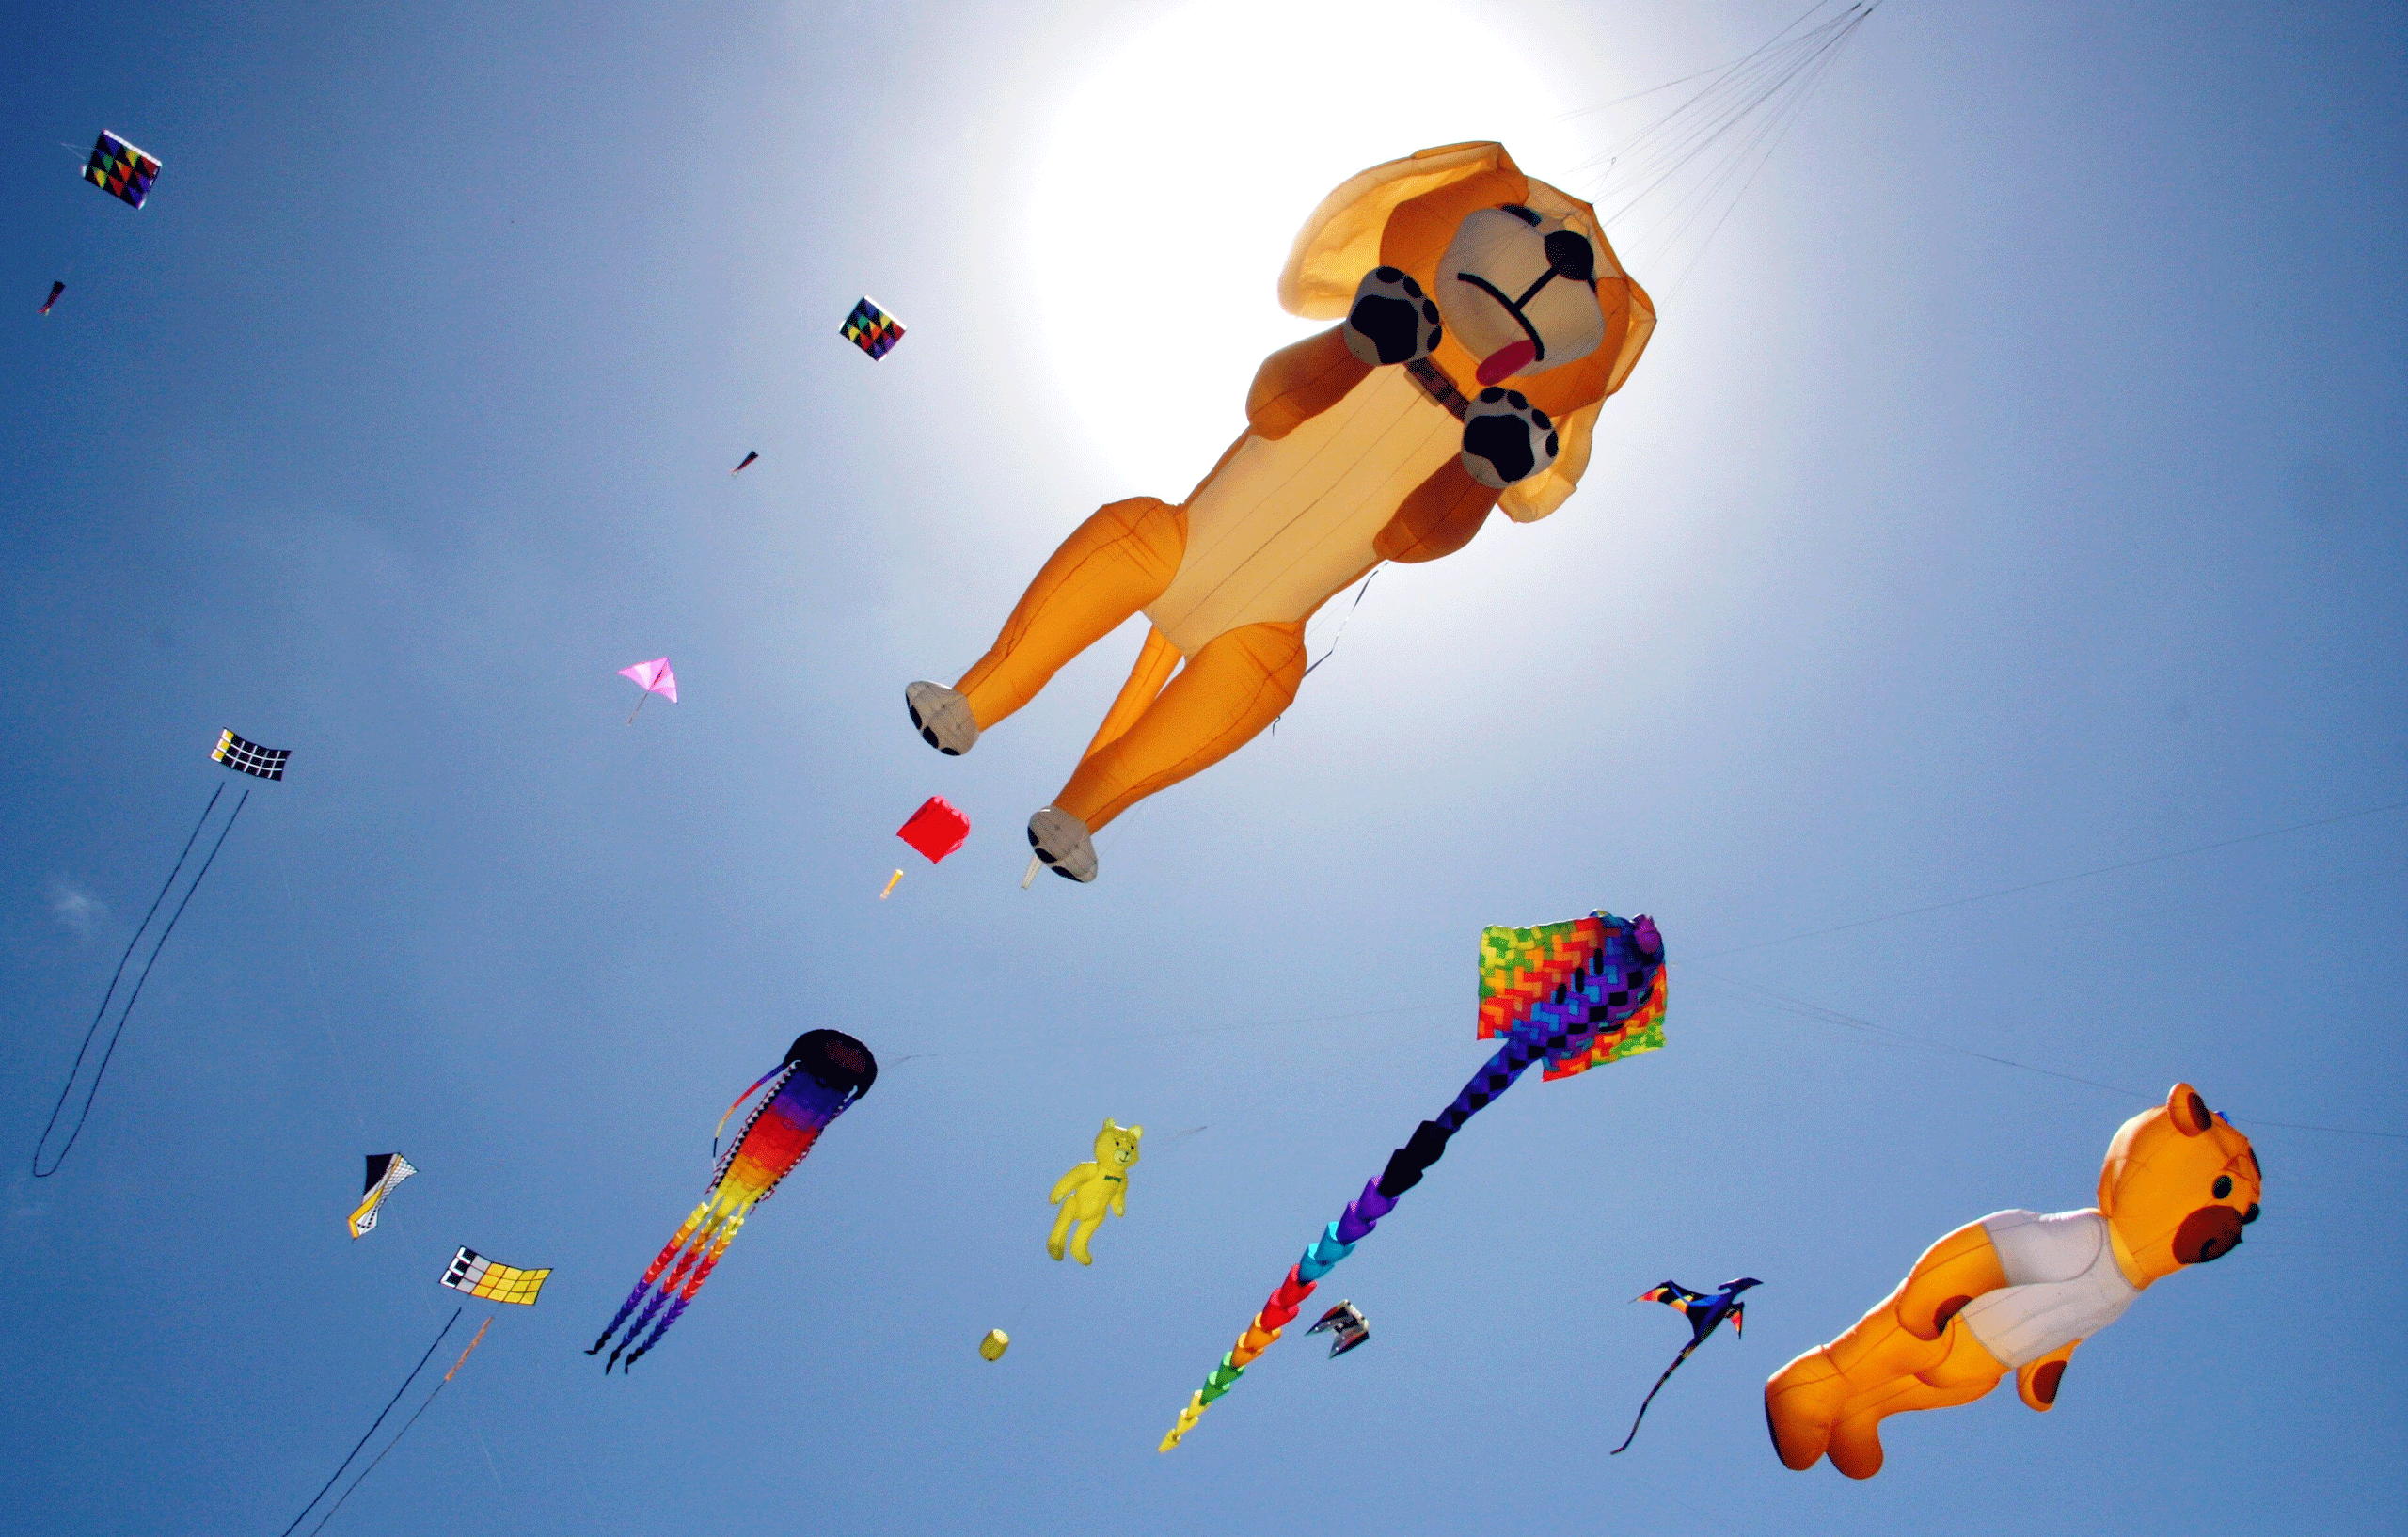 Several kites flying in the sky